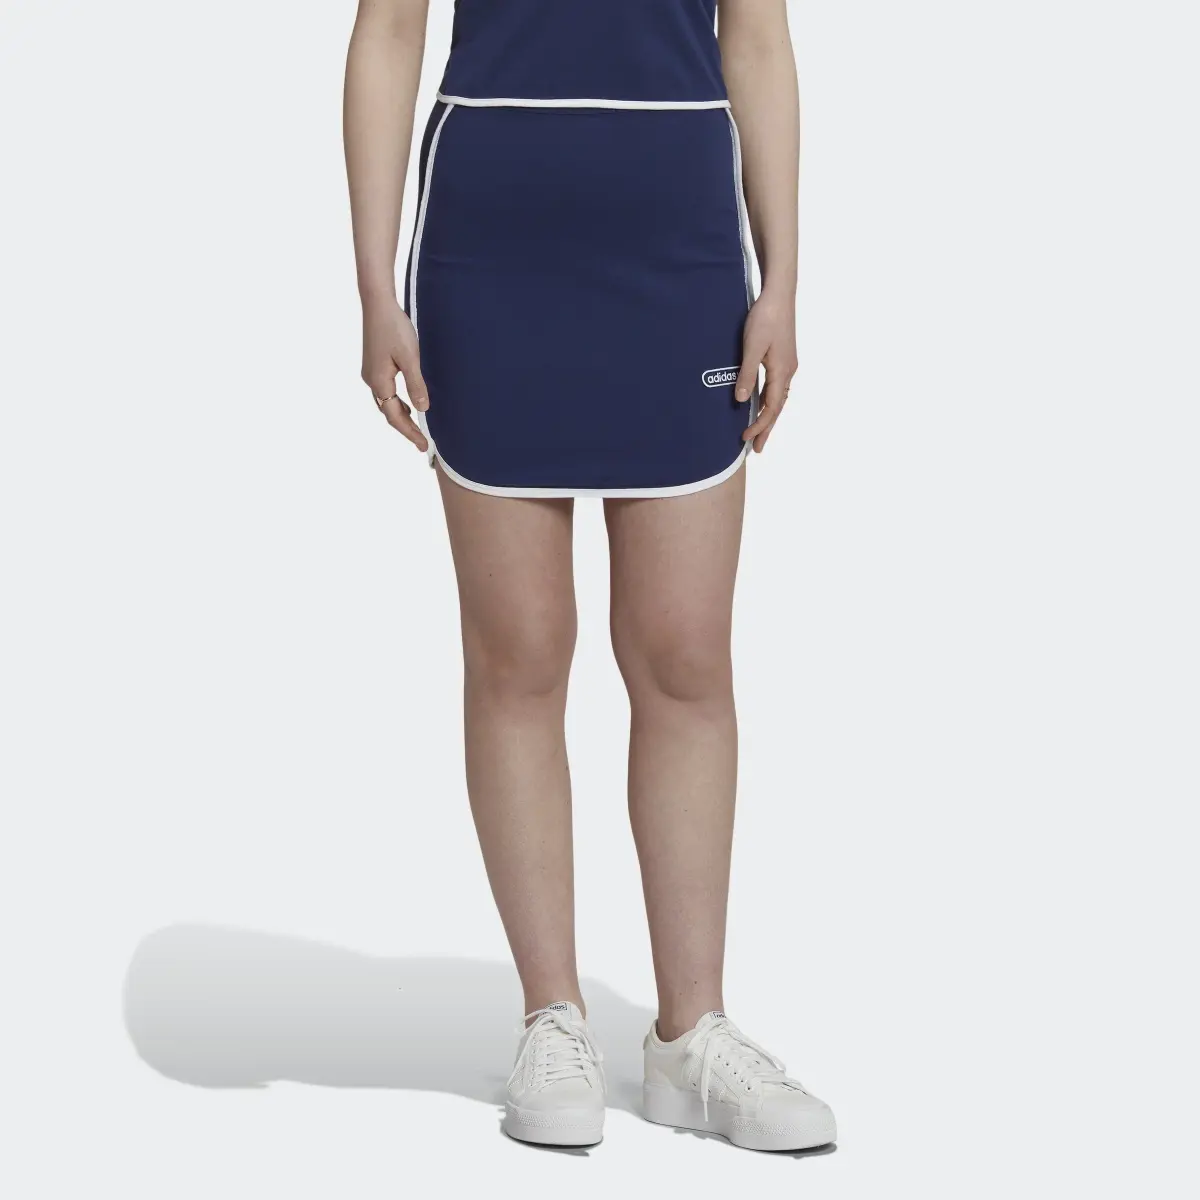 Adidas Mini Skirt with Binding Details. 1